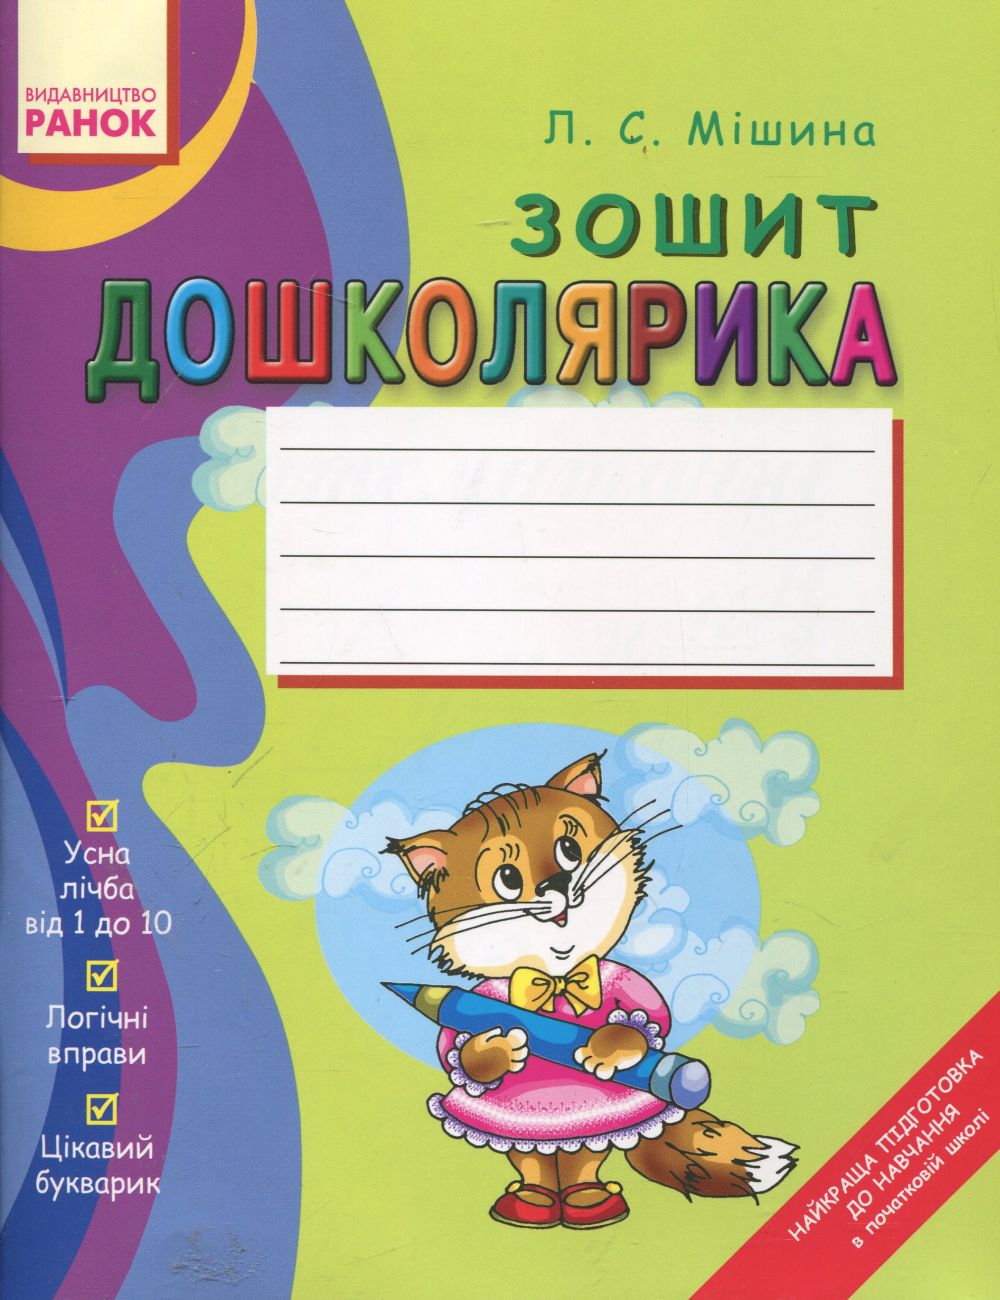 Notebook Of A Preschooler / Зошит дошколярика Lilia Myshina / Лілія Мішина 9789666721436-1